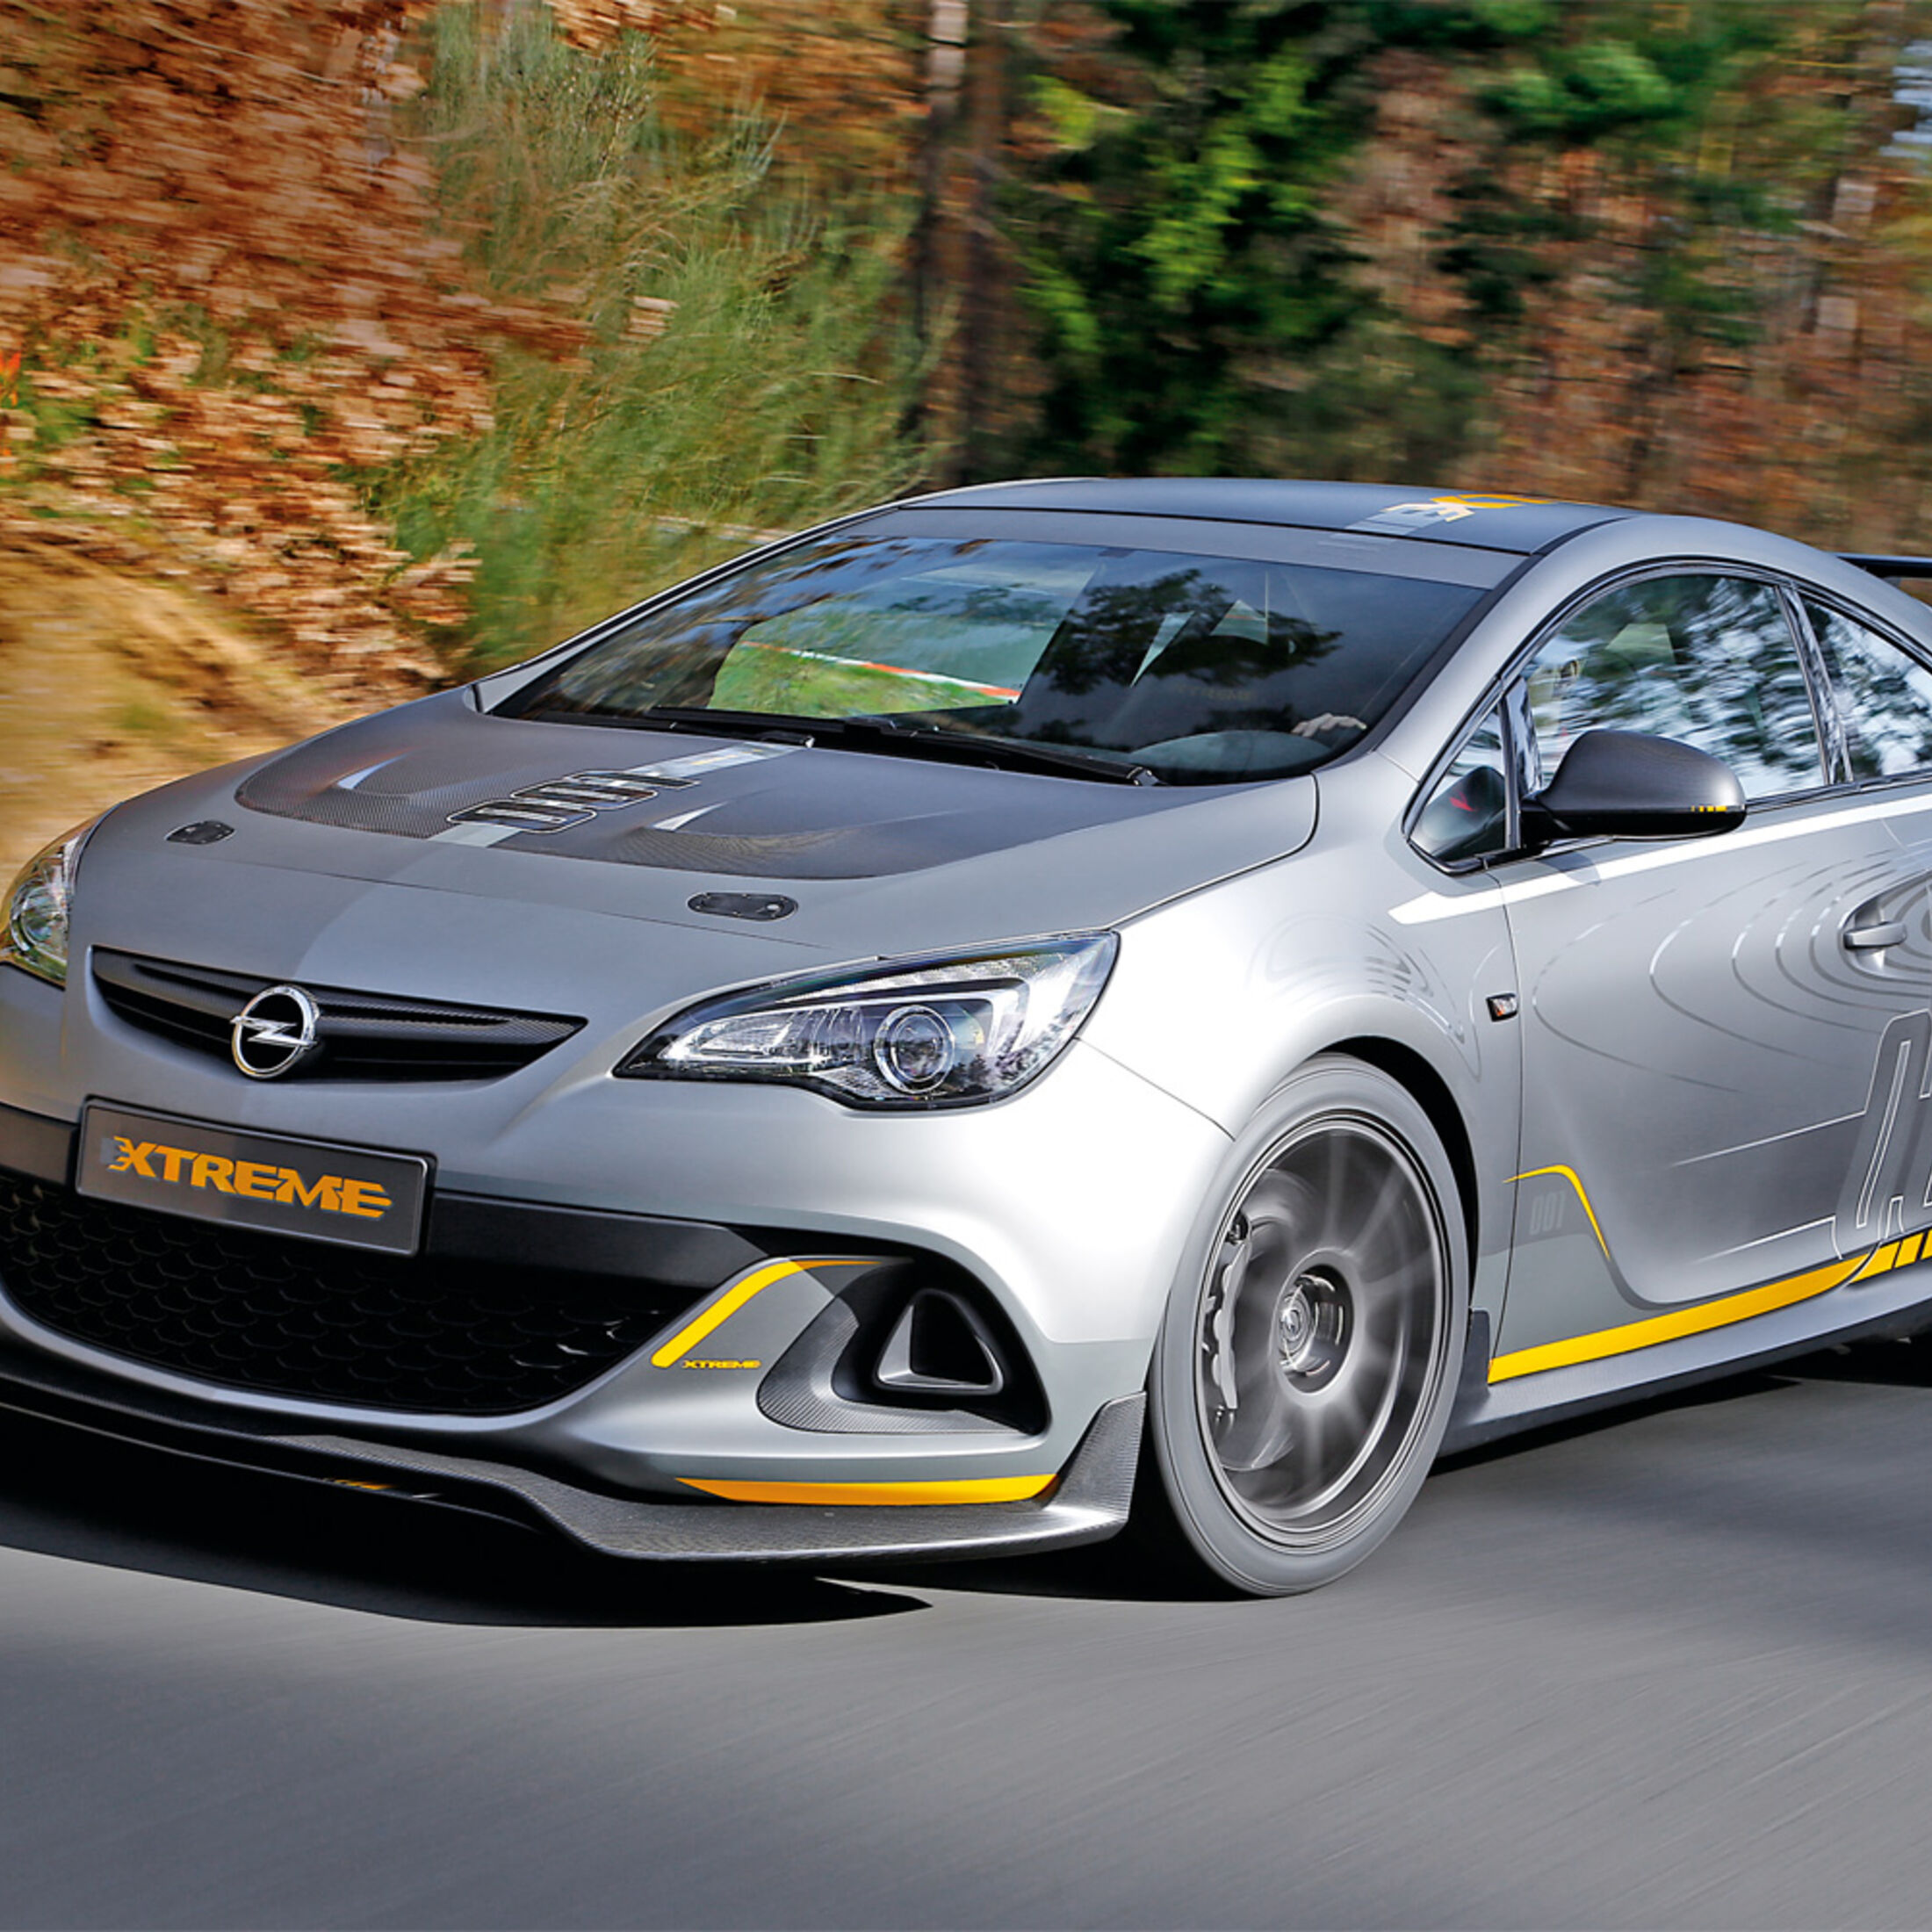 https://imgr1.auto-motor-und-sport.de/Opel-Astra-OPC-Extreme-Frontansicht-jsonLd1x1-24b47068-763425.jpg